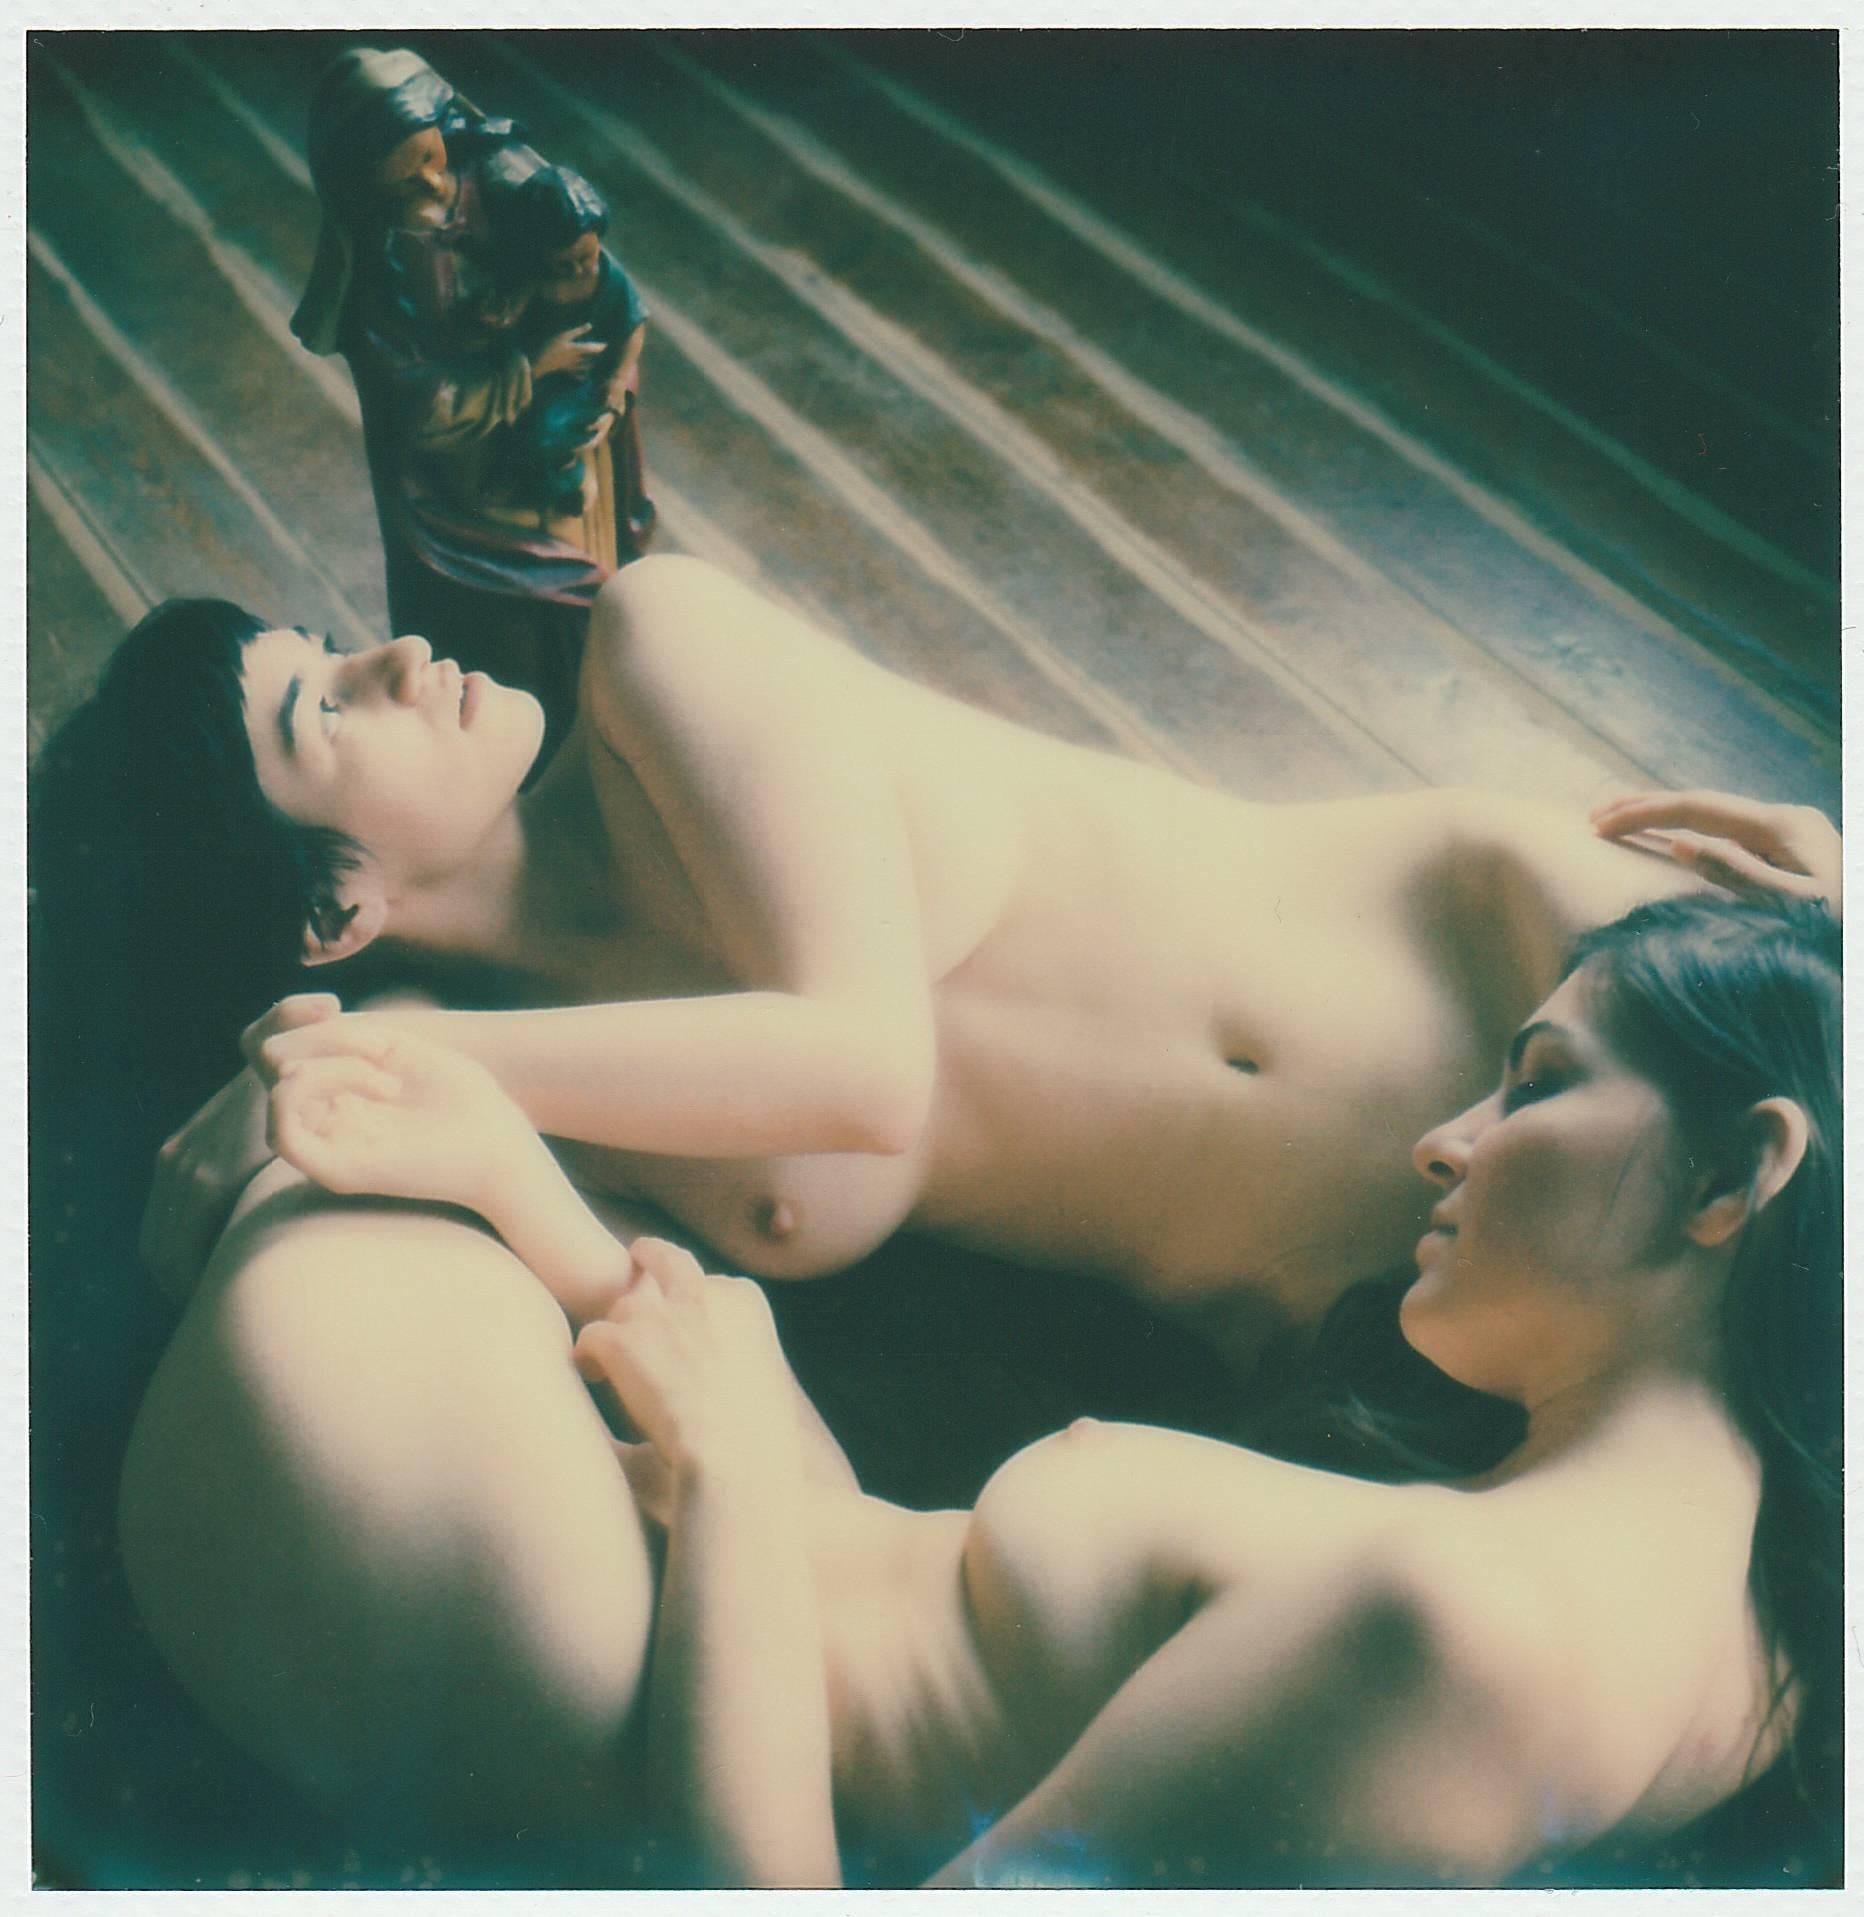 Sven van Driessche Nude Photograph - Maria doesn't judge - Nude, Women, Polaroid, 21st Century, Contemporary